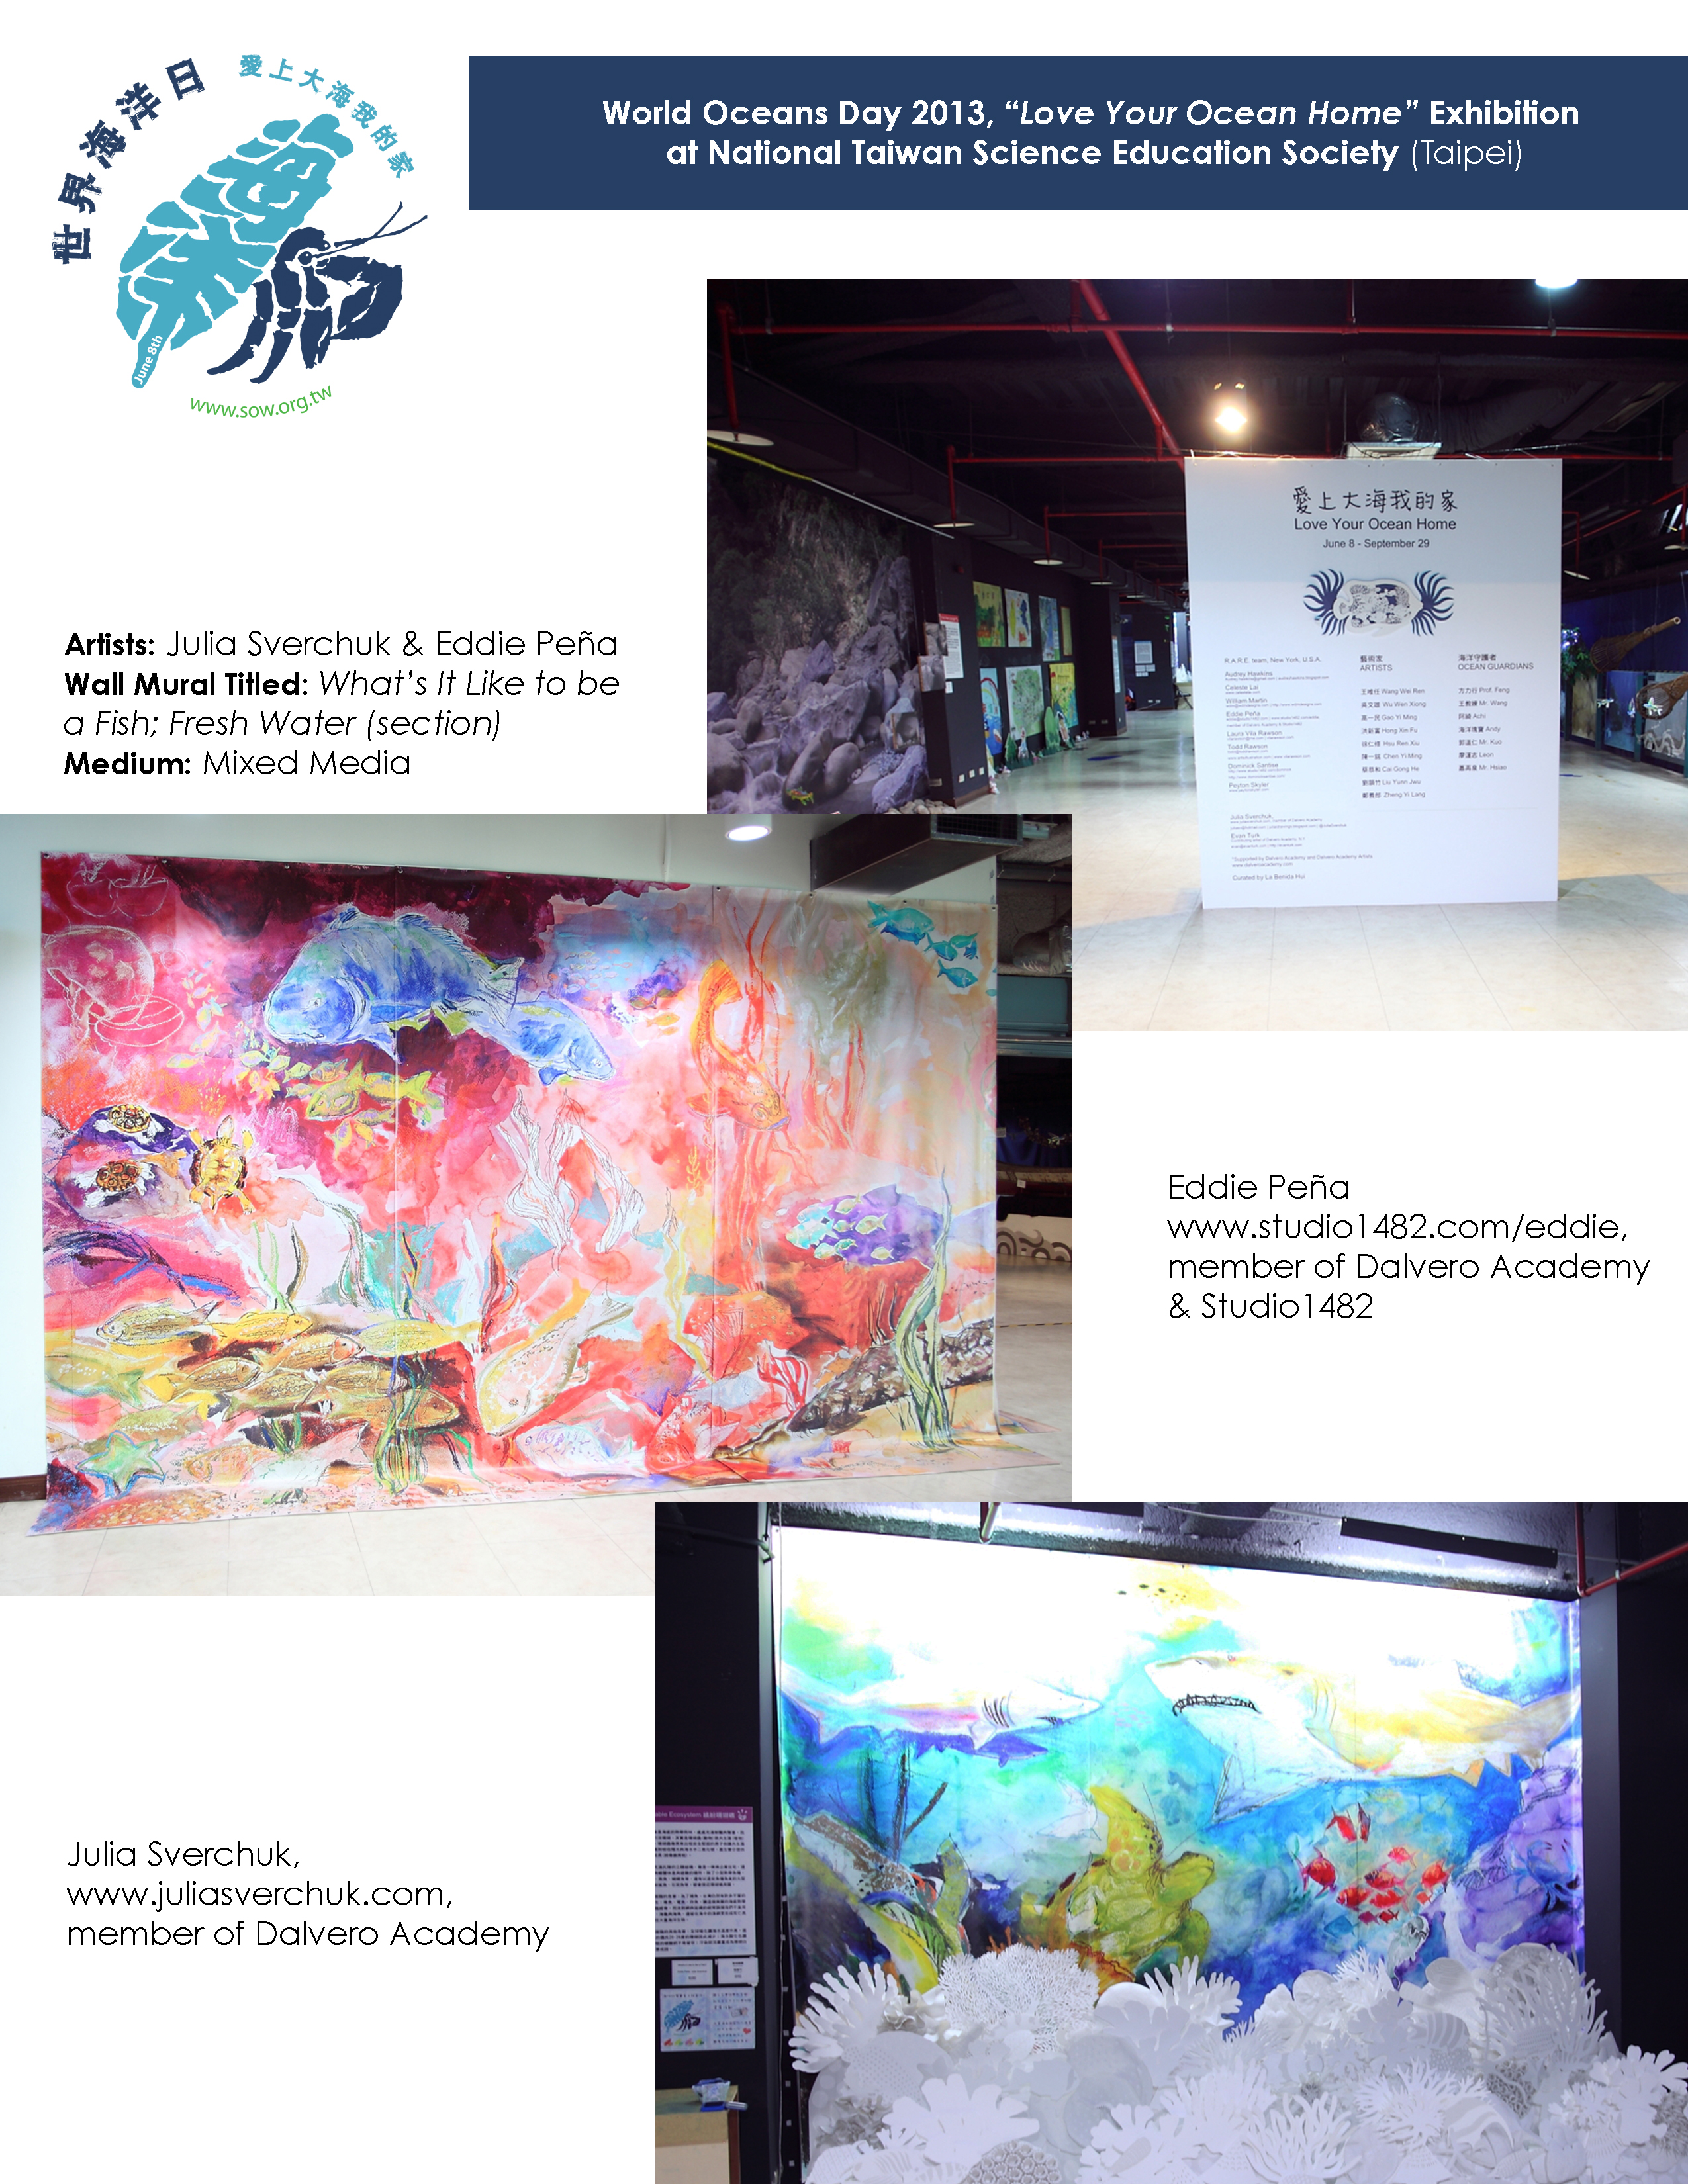 Coastal Awareness Exhibit, "Ocean Passengers" at North Coast and Guanyinshan National Scenic Area, Main Visitor Center, Jin shan,Taiwan